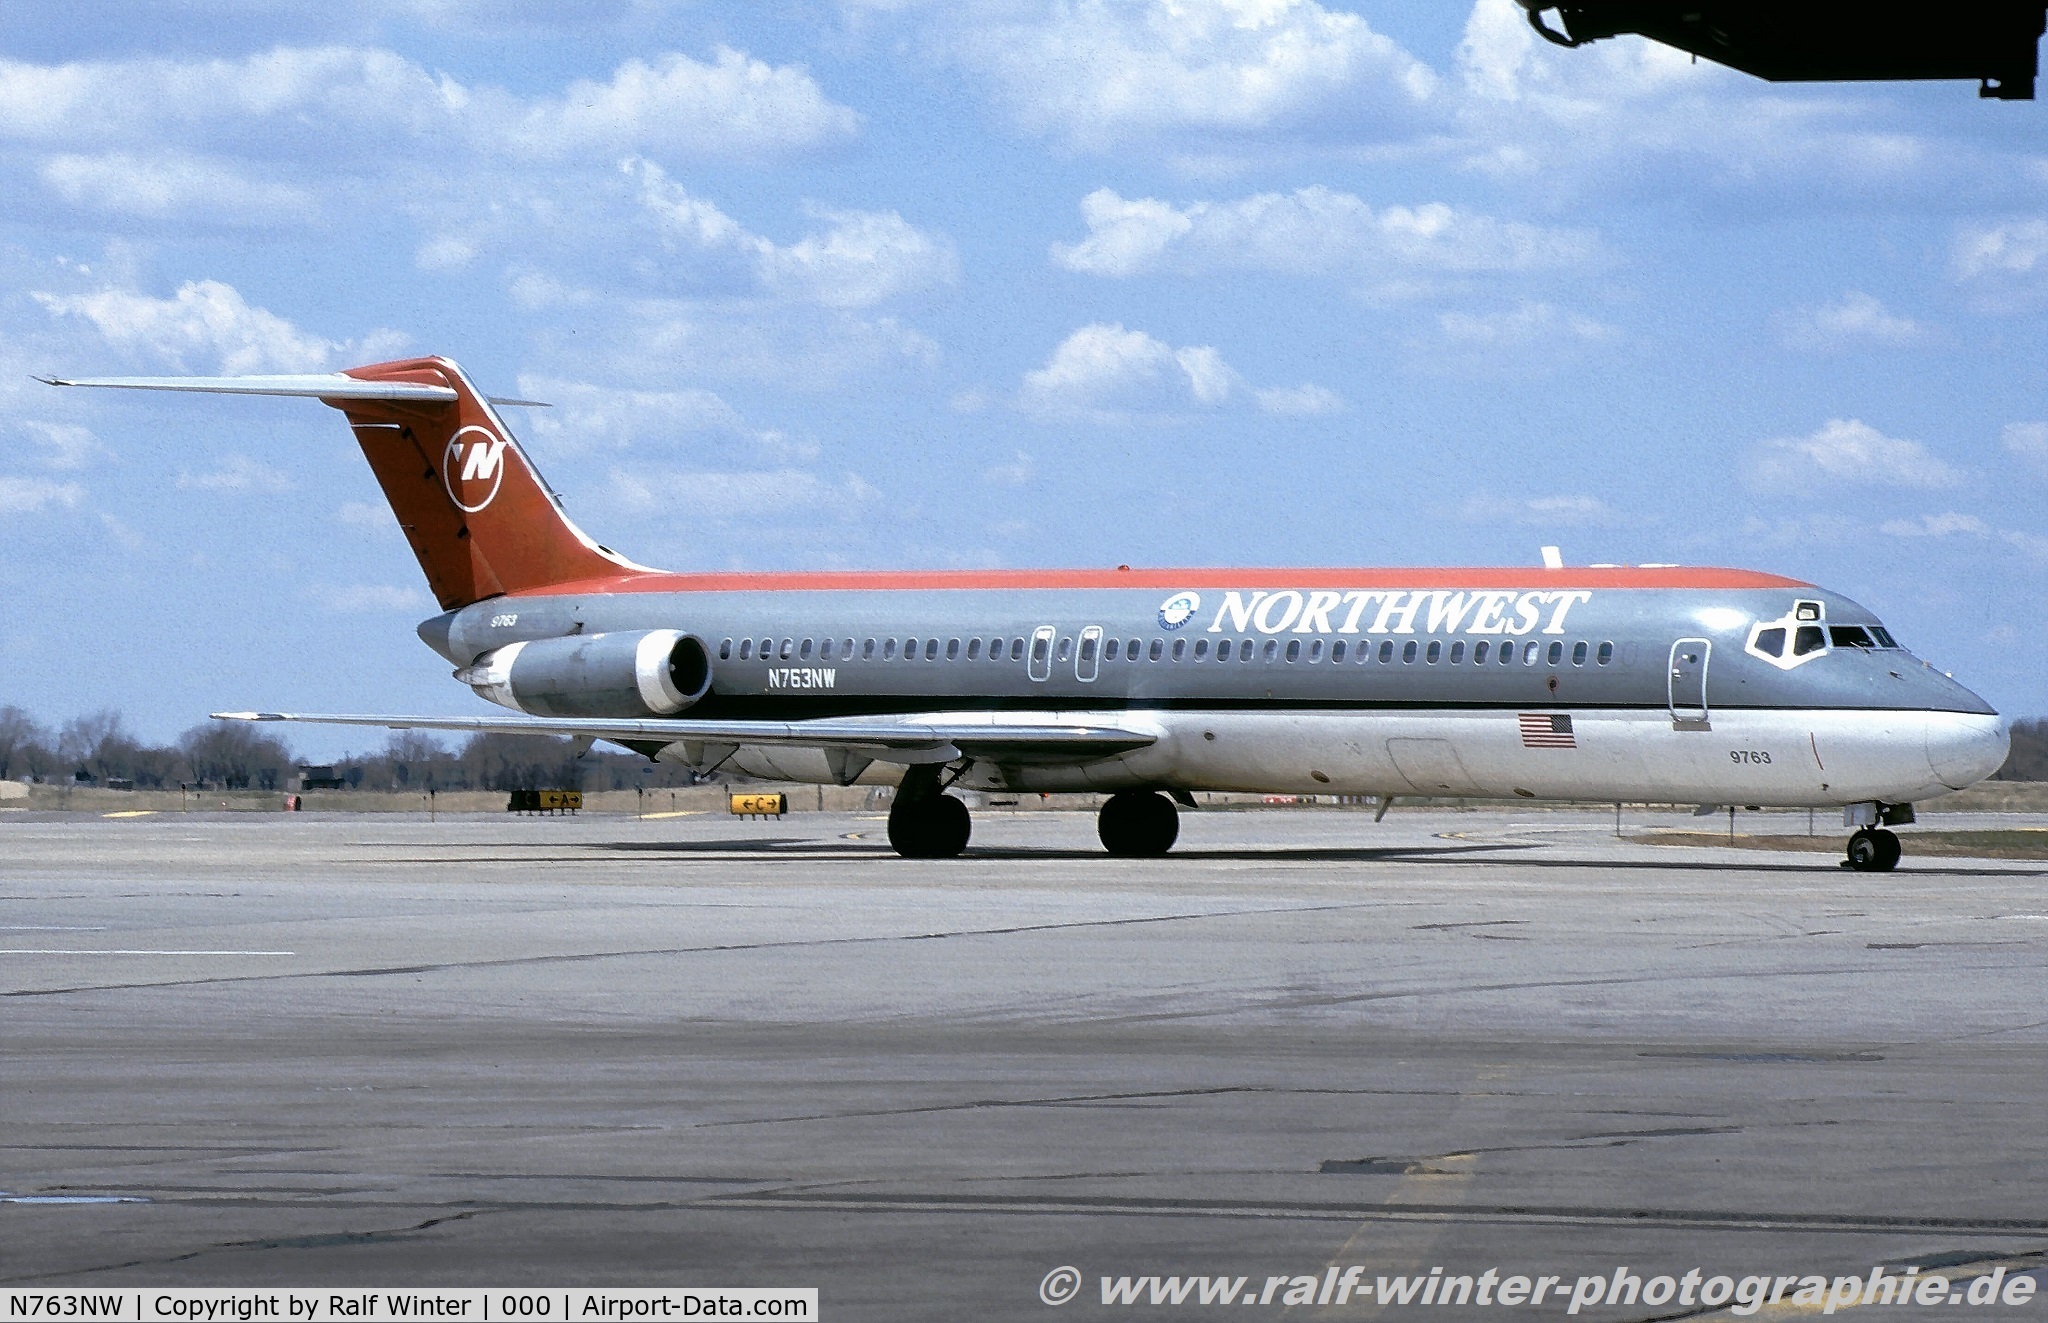 N763NW, 1969 Douglas DC-9-41 C/N 47396, McDonnell Douglas DC9-41 - NW NWA Northwest Airlines - 47396 - N763NW - 2004